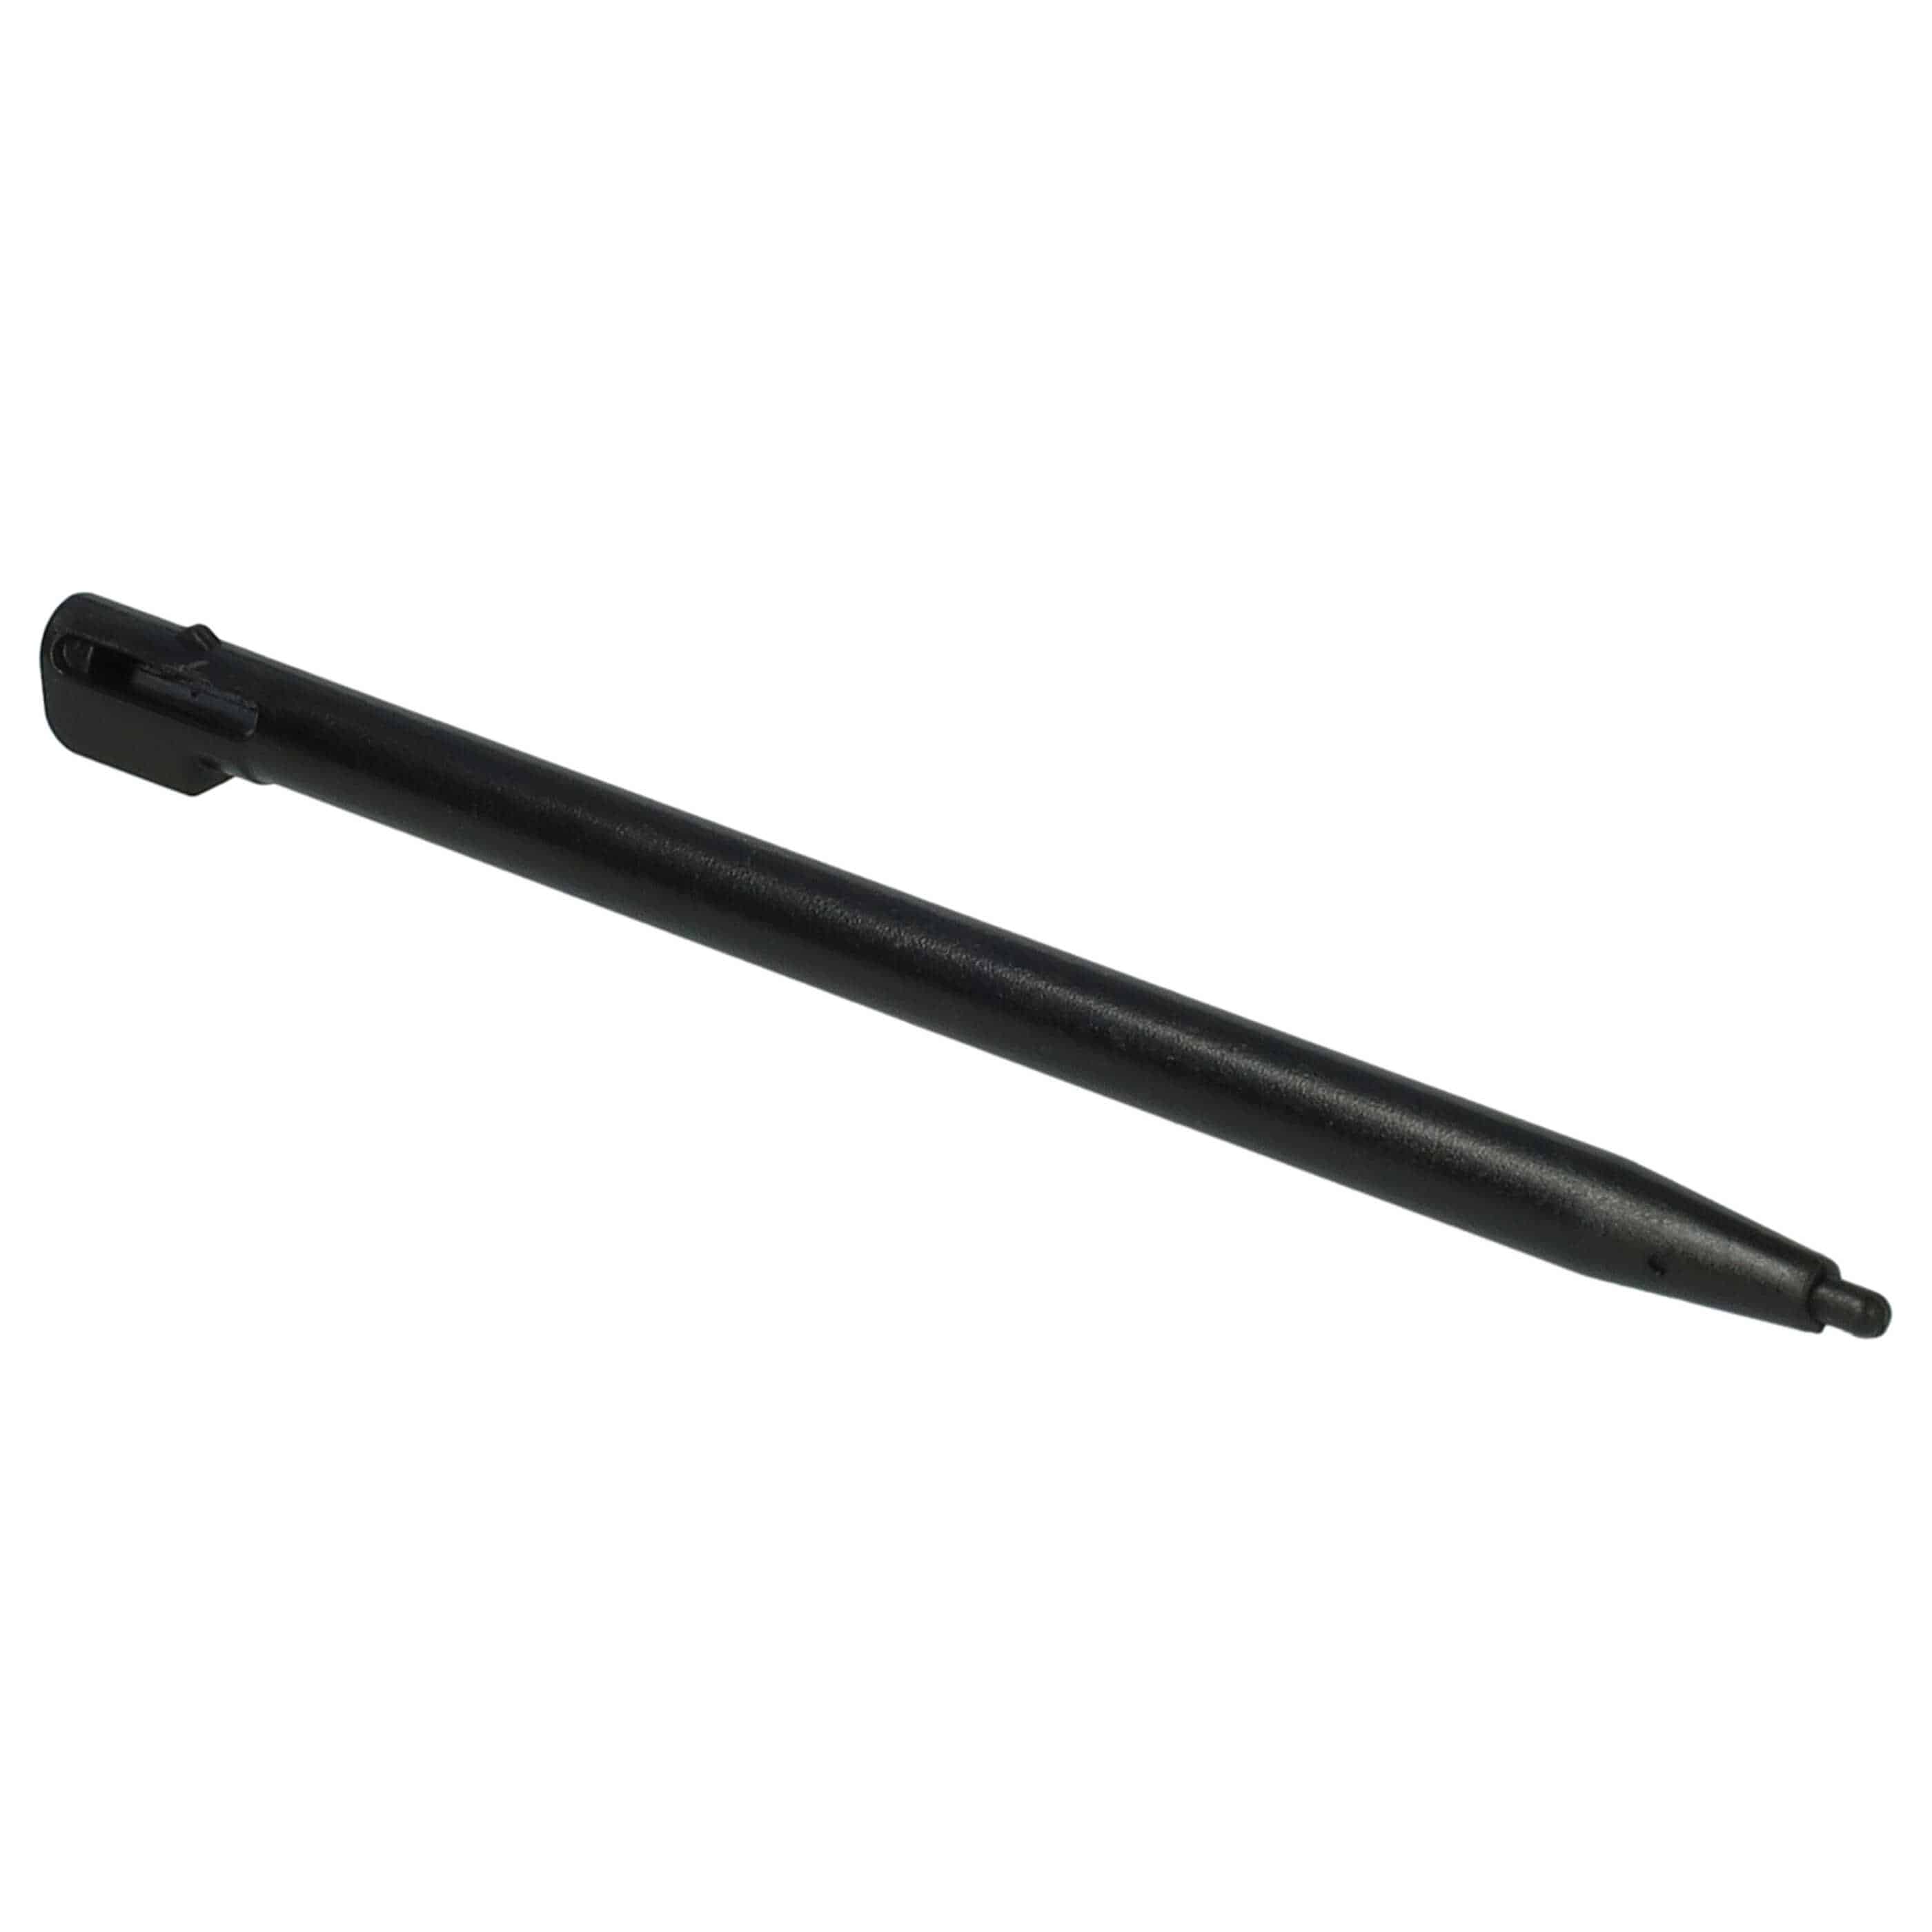 10x lápices compatible con Nintendo DSi consola de juego - negro, blanco